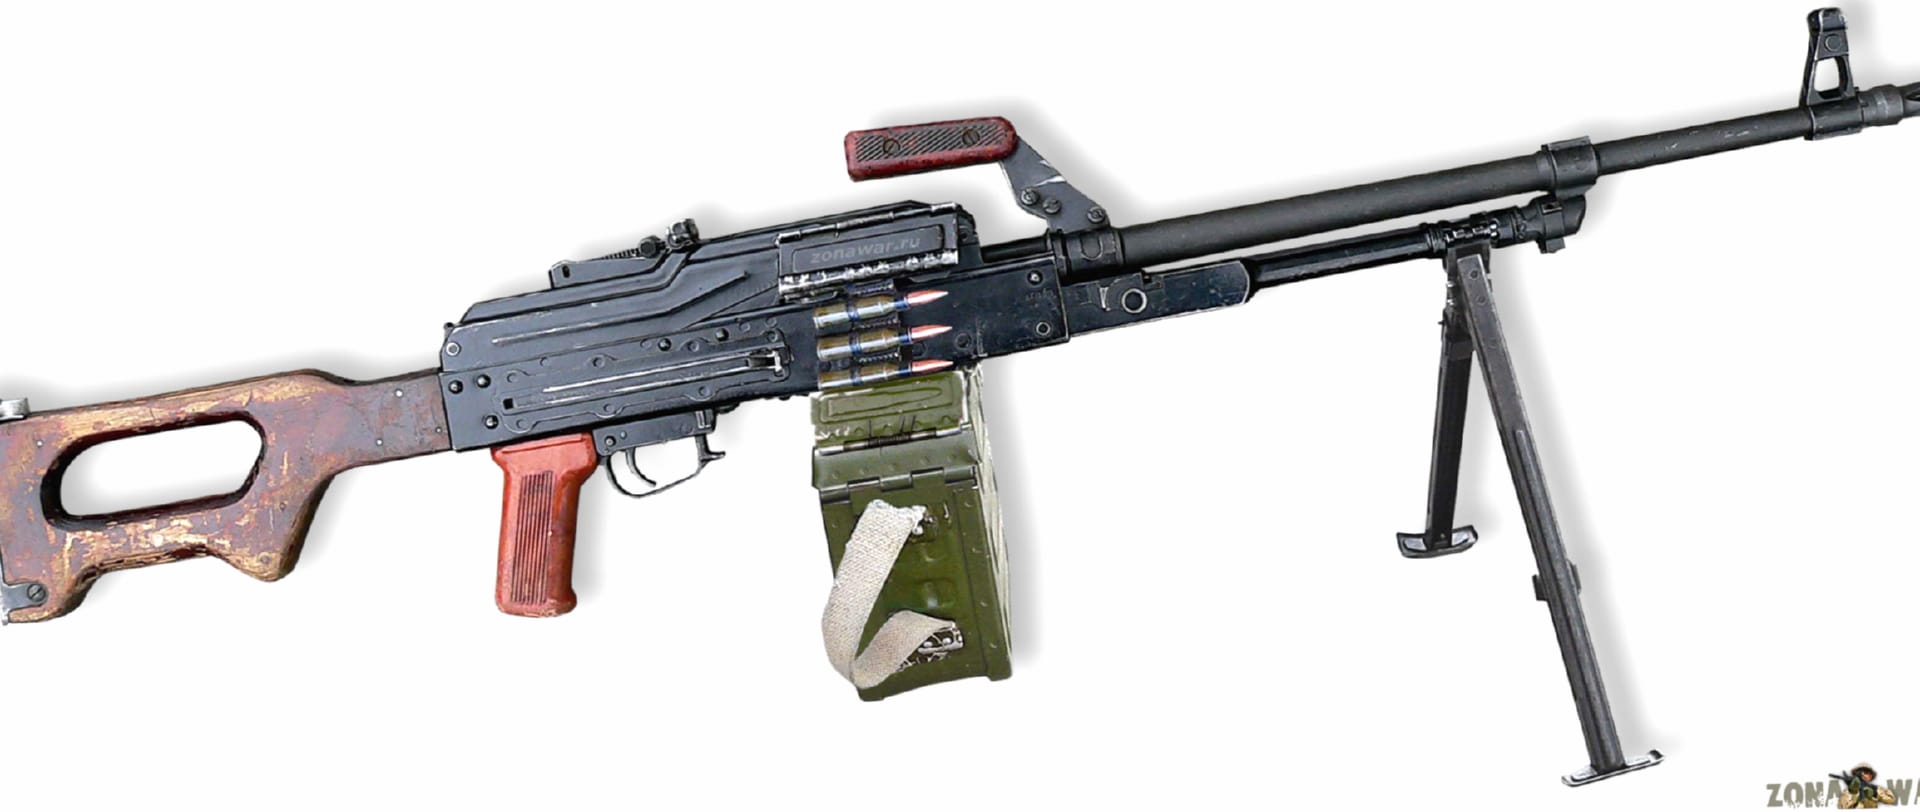 Kalashnikov Pk Rifle at 1024 x 1024 iPad size wallpapers HD quality